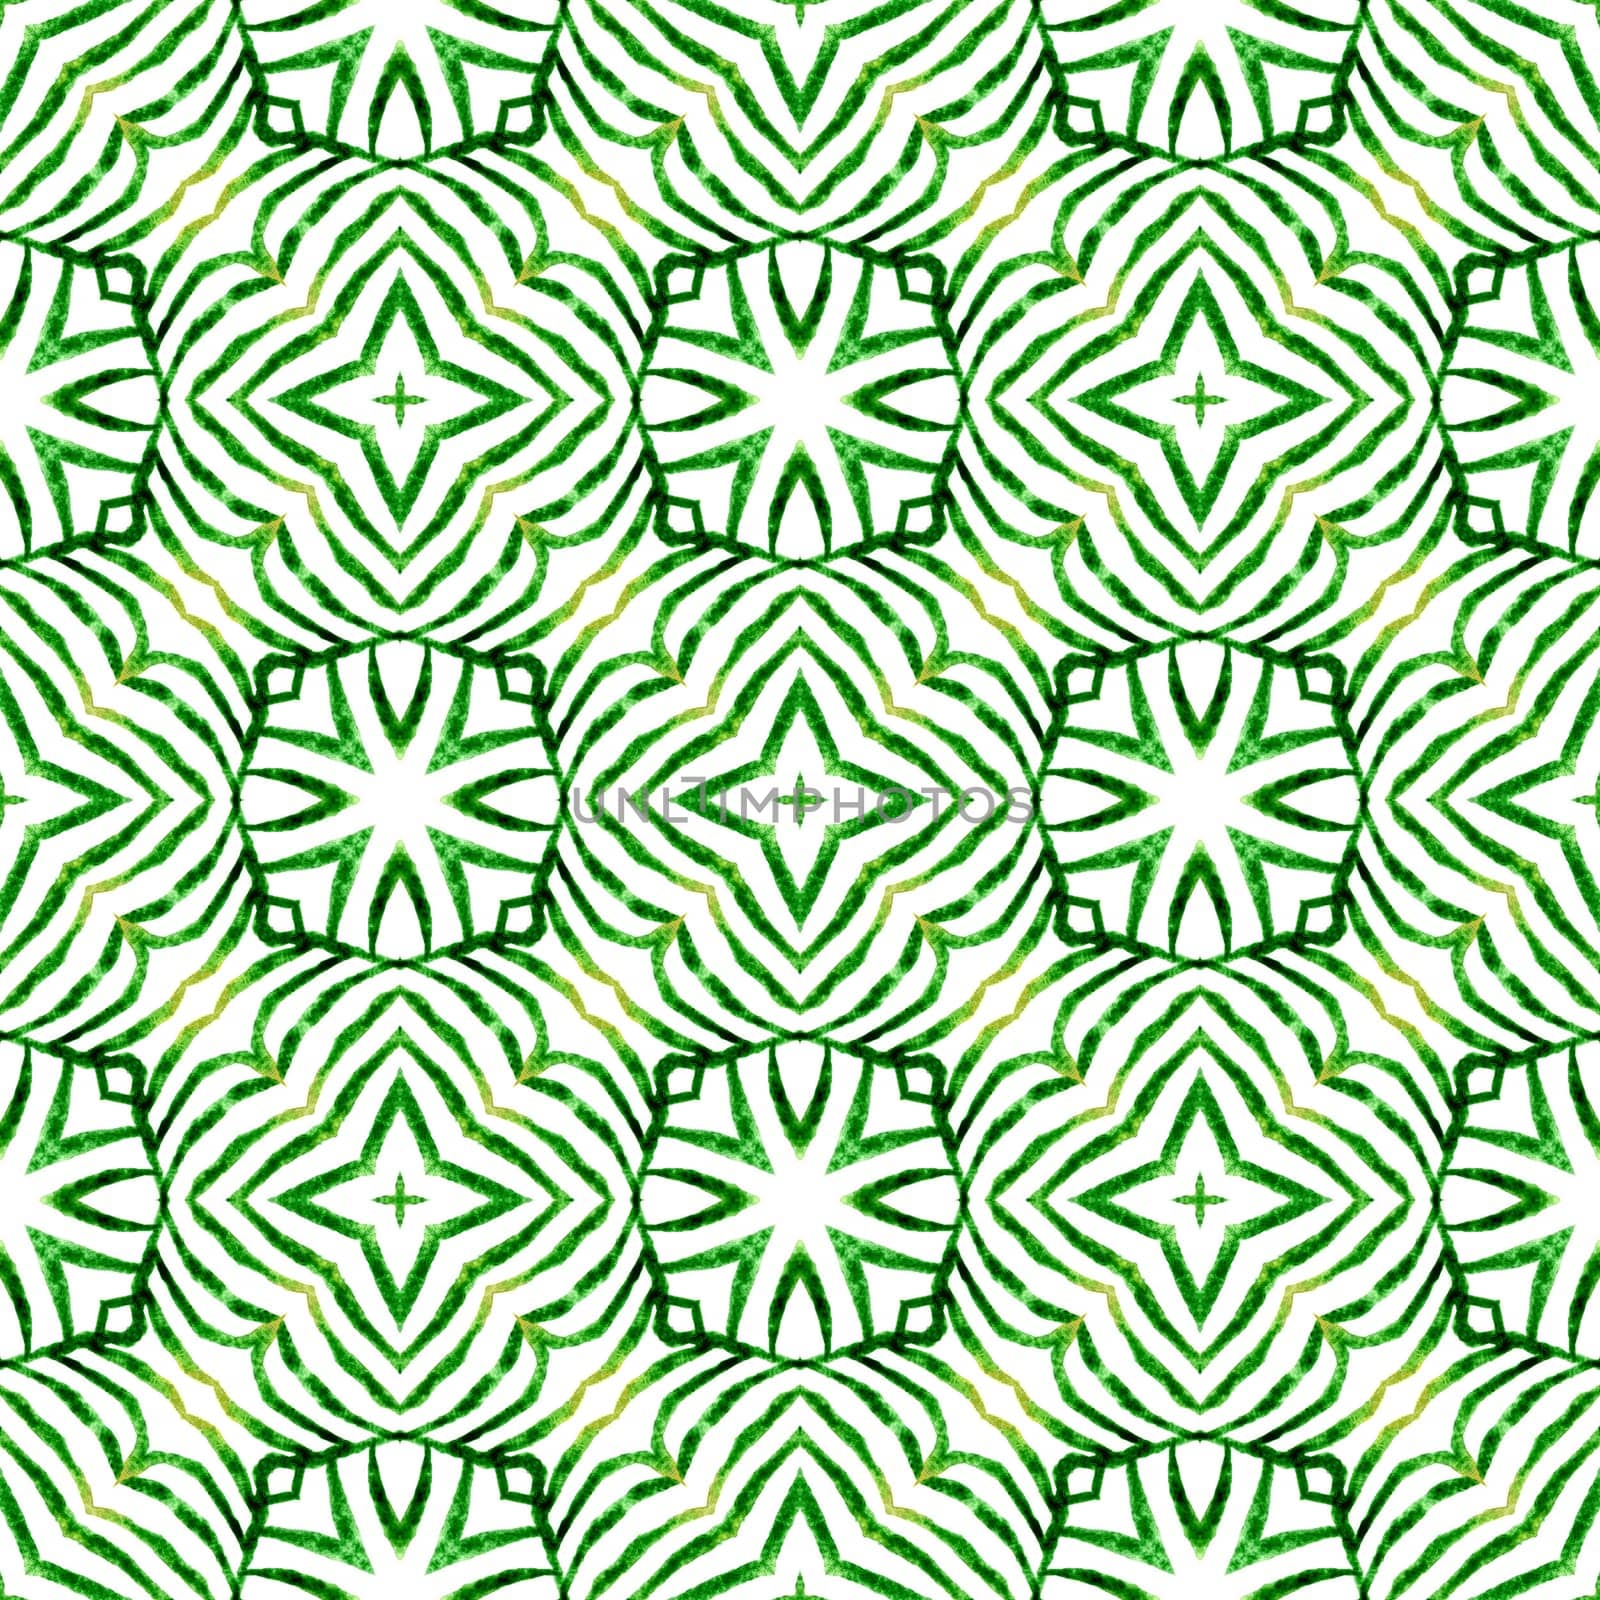 Mosaic seamless pattern. Green shapely boho chic summer design. Textile ready tempting print, swimwear fabric, wallpaper, wrapping. Hand drawn green mosaic seamless border.